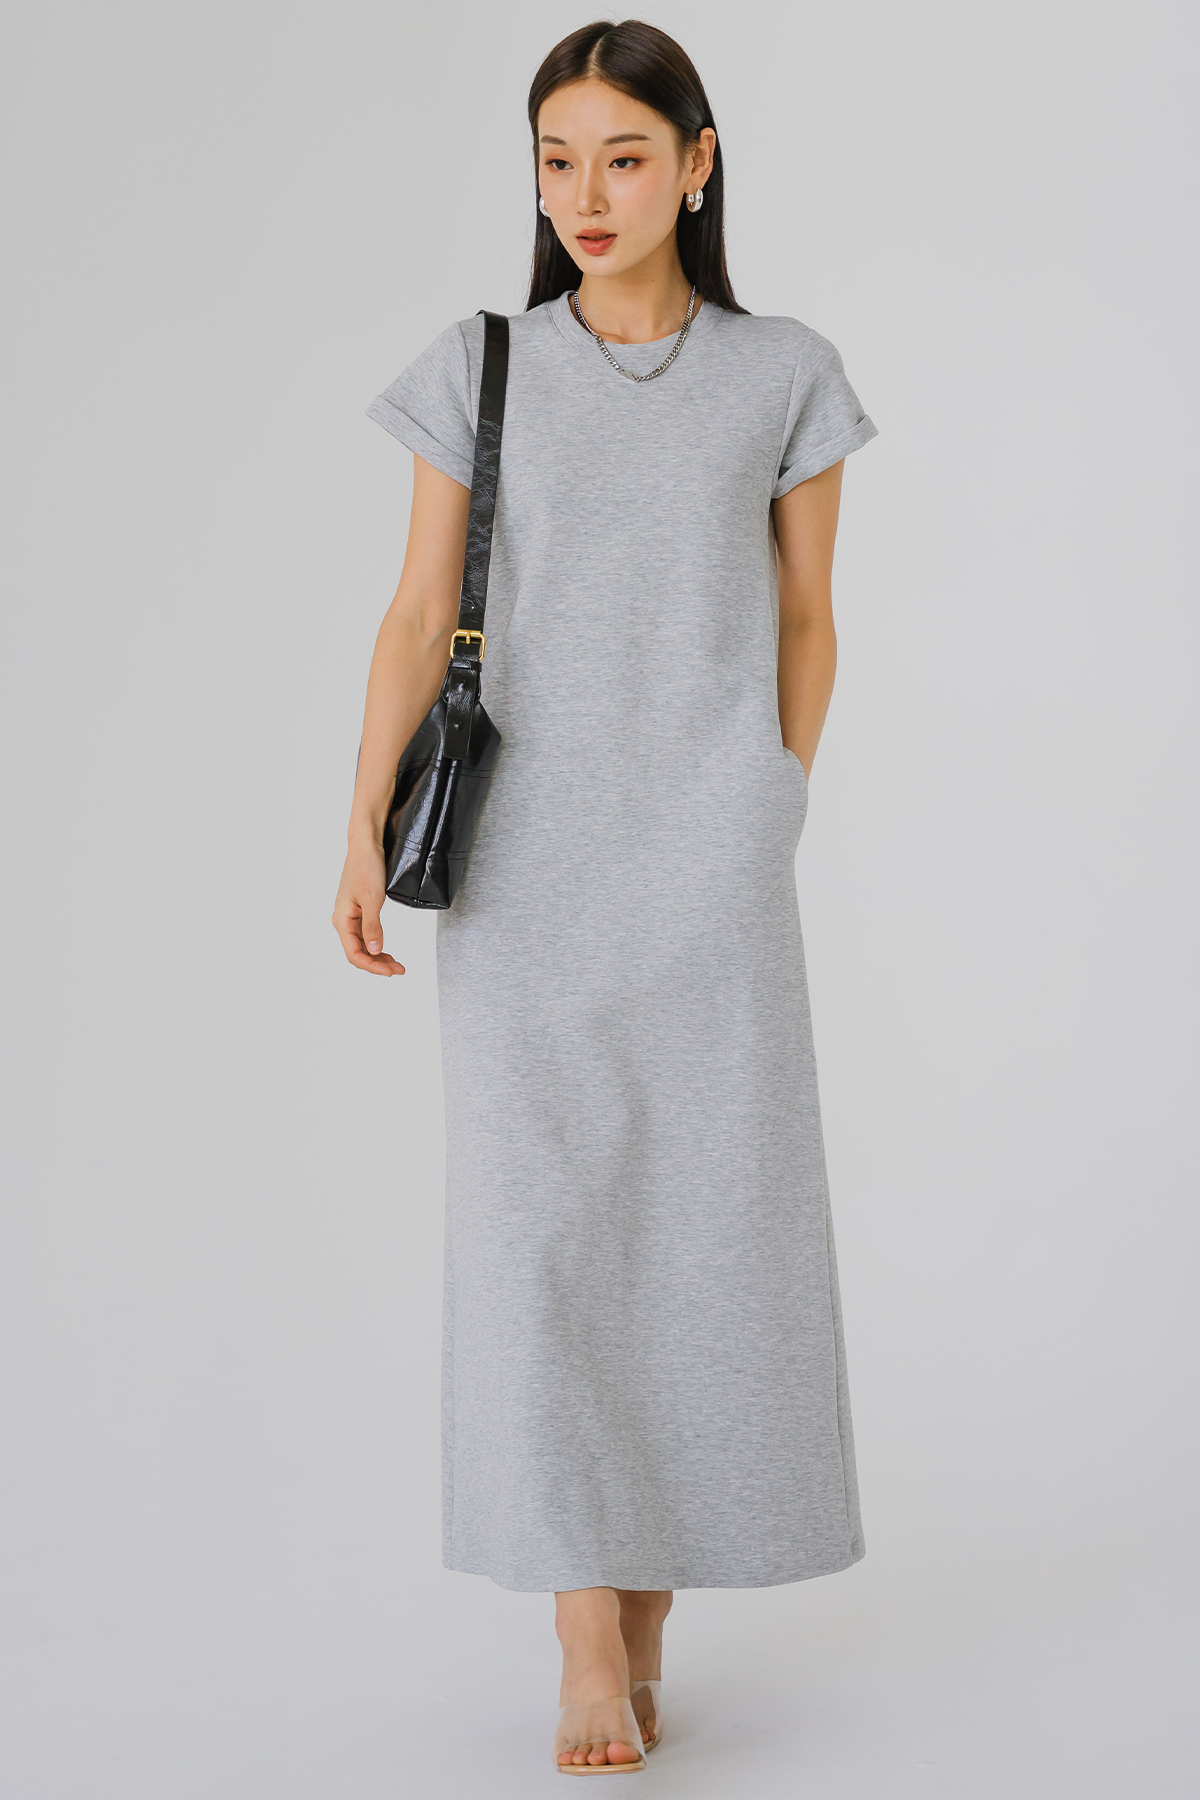 Backorder* For Keeps Round Neck Midaxi Dress (Light Grey)